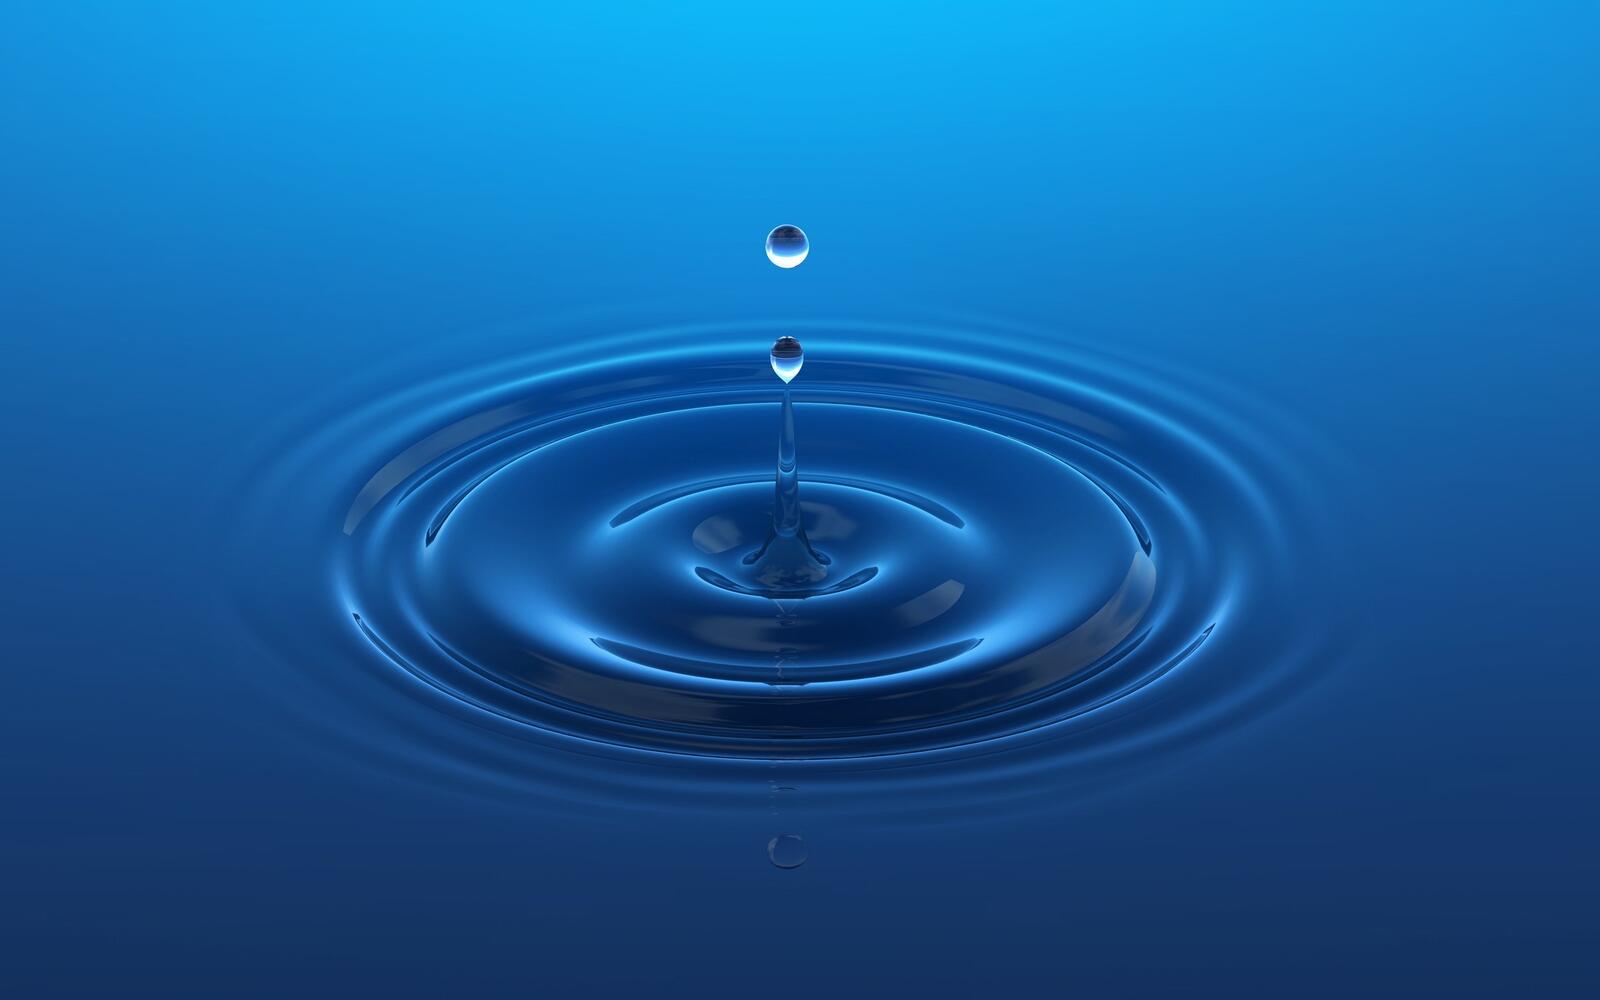 Wallpapers water drop ripple blue background on the desktop